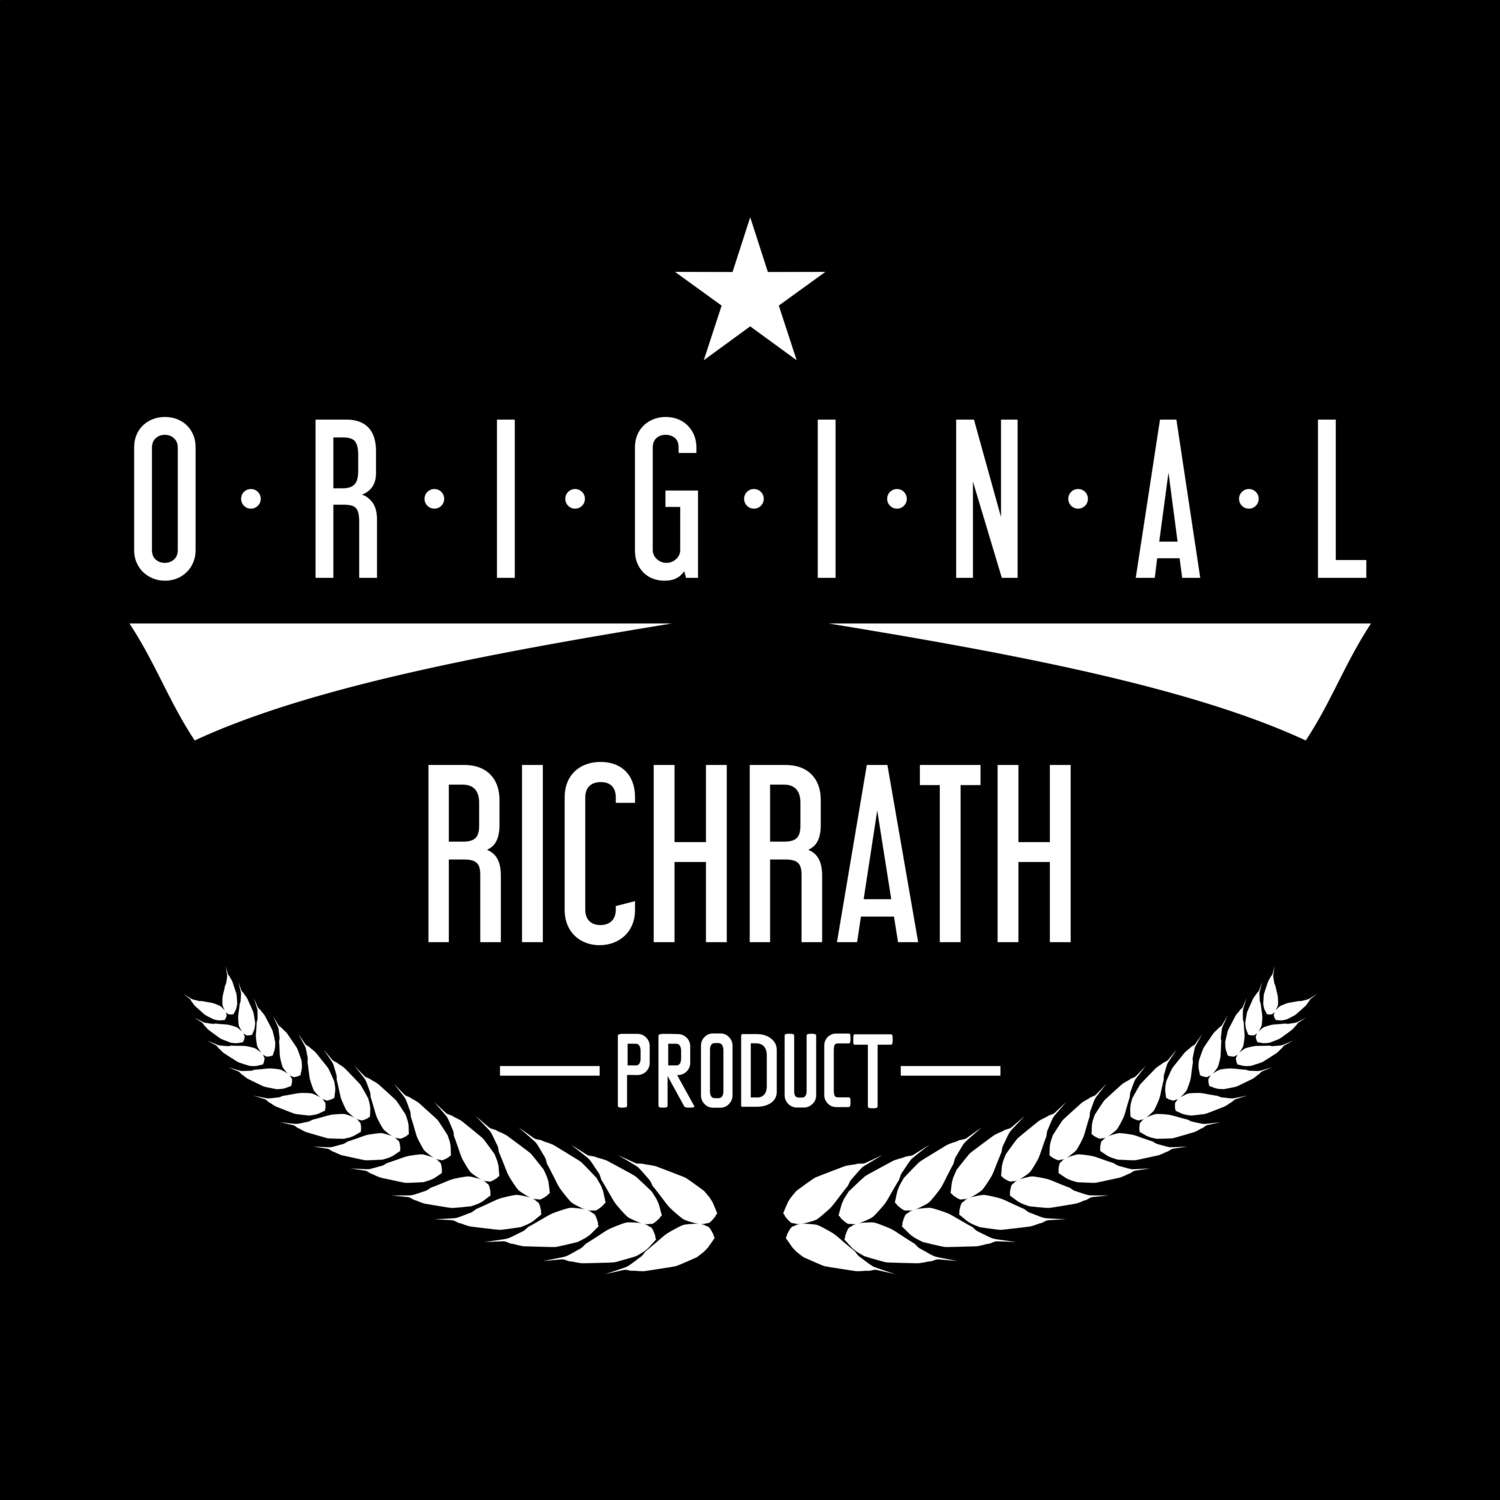 Richrath T-Shirt »Original Product«